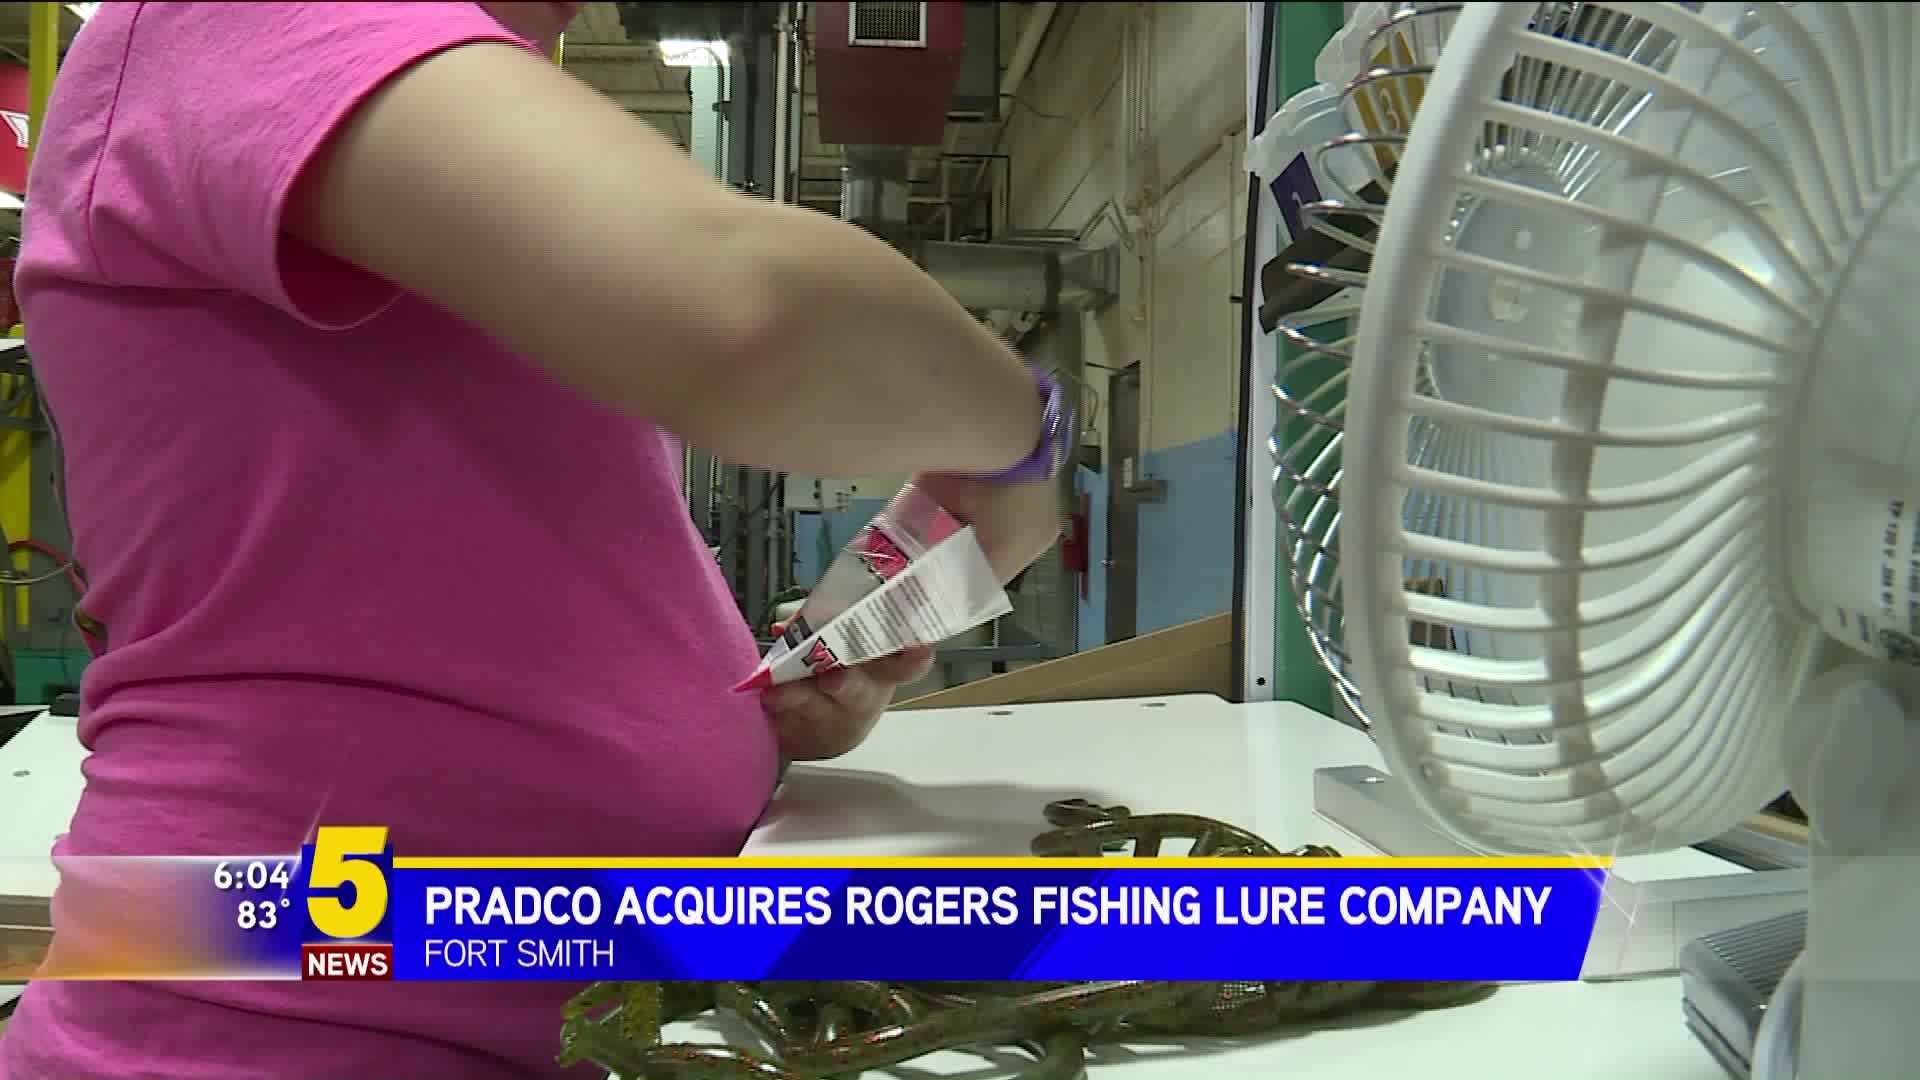 Pradco Aquires Rogers Fishing Lure Company